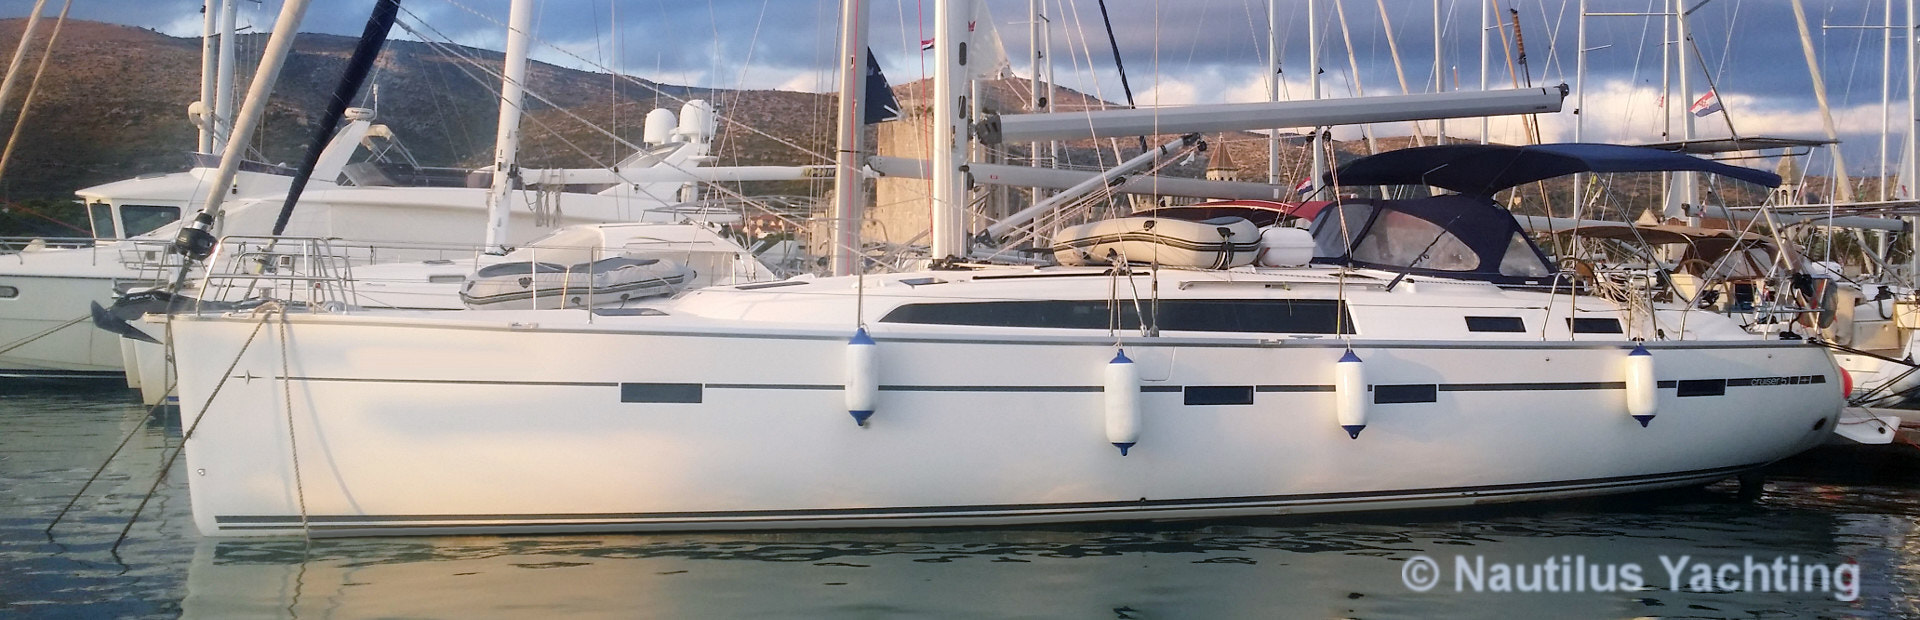 Bavaria Cruiser 51 - sailing yacht charter in Croatia